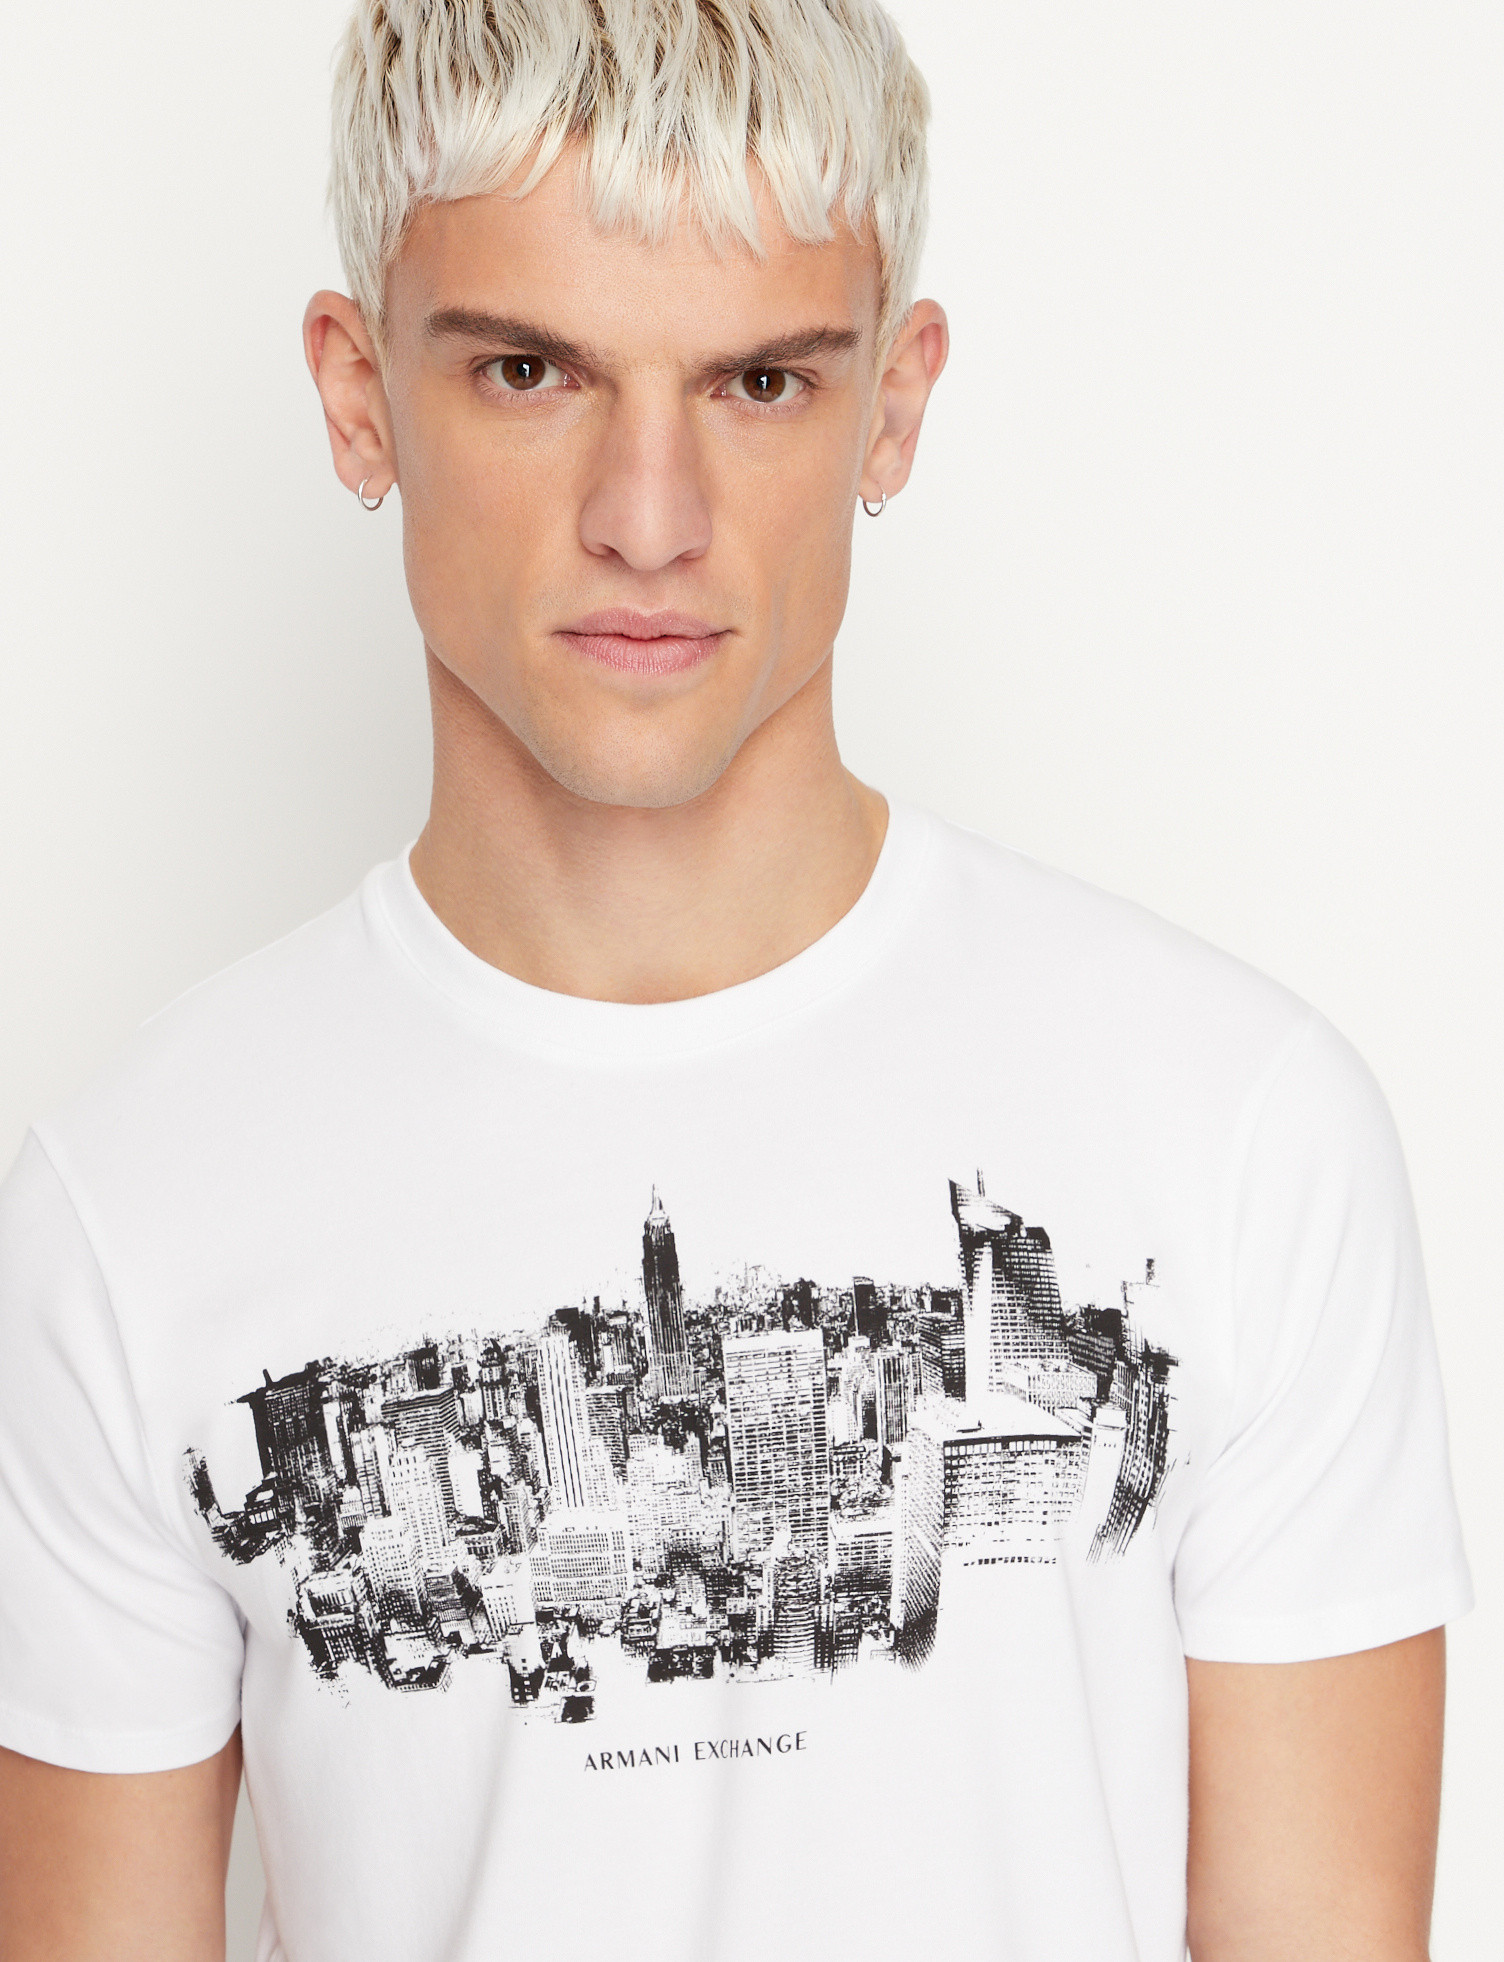 Armani Exchange - Slim fit printed T-shirt, White, large image number 3